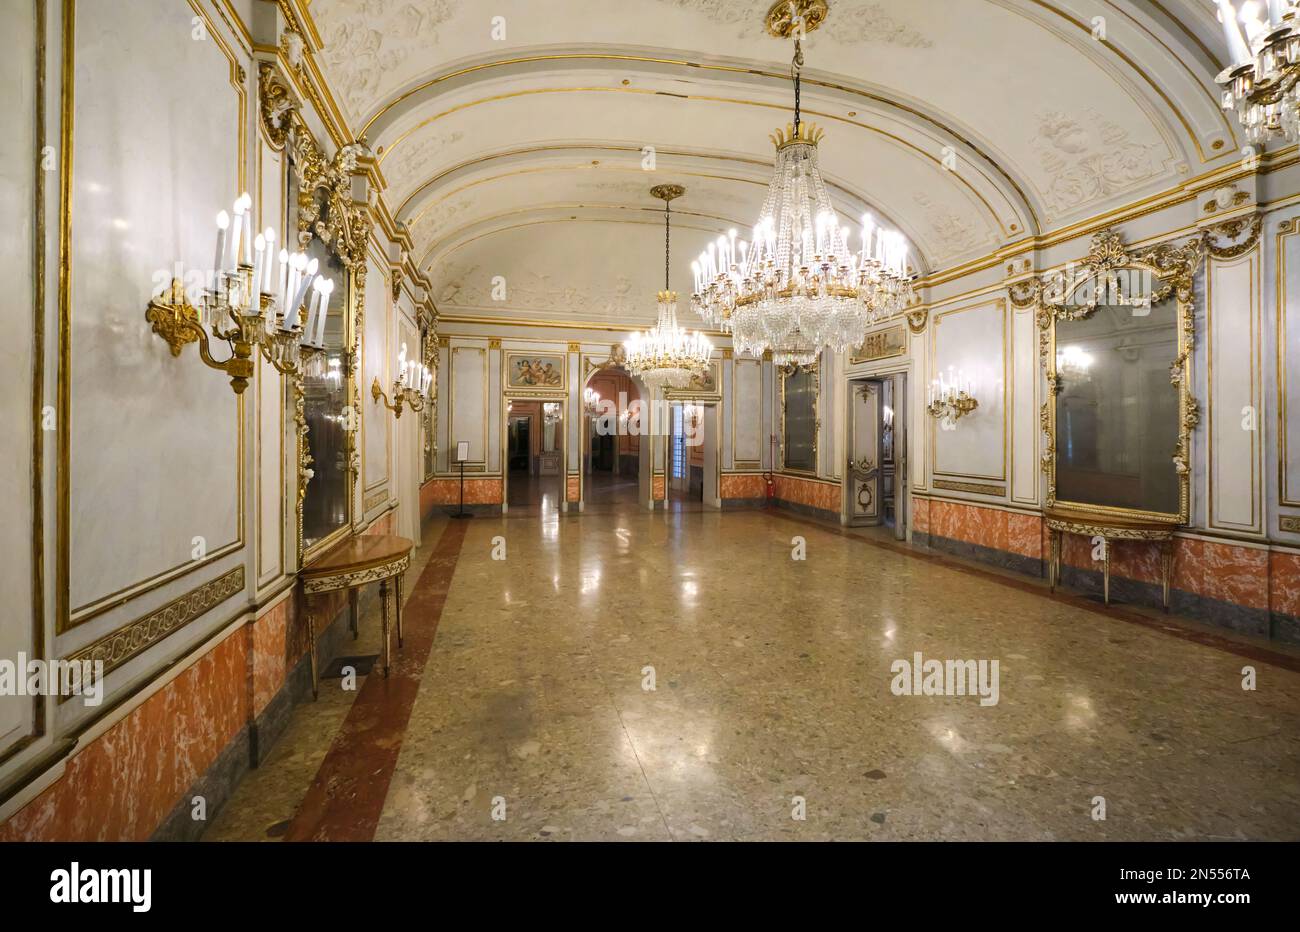 Ein großer Ballsaal mit Kronleuchtern und Marmorböden mit Intarsien. Im Herrenmuseum, Museo Pignatelli in Neapel, Neapel, Italien, Italien. Stockfoto